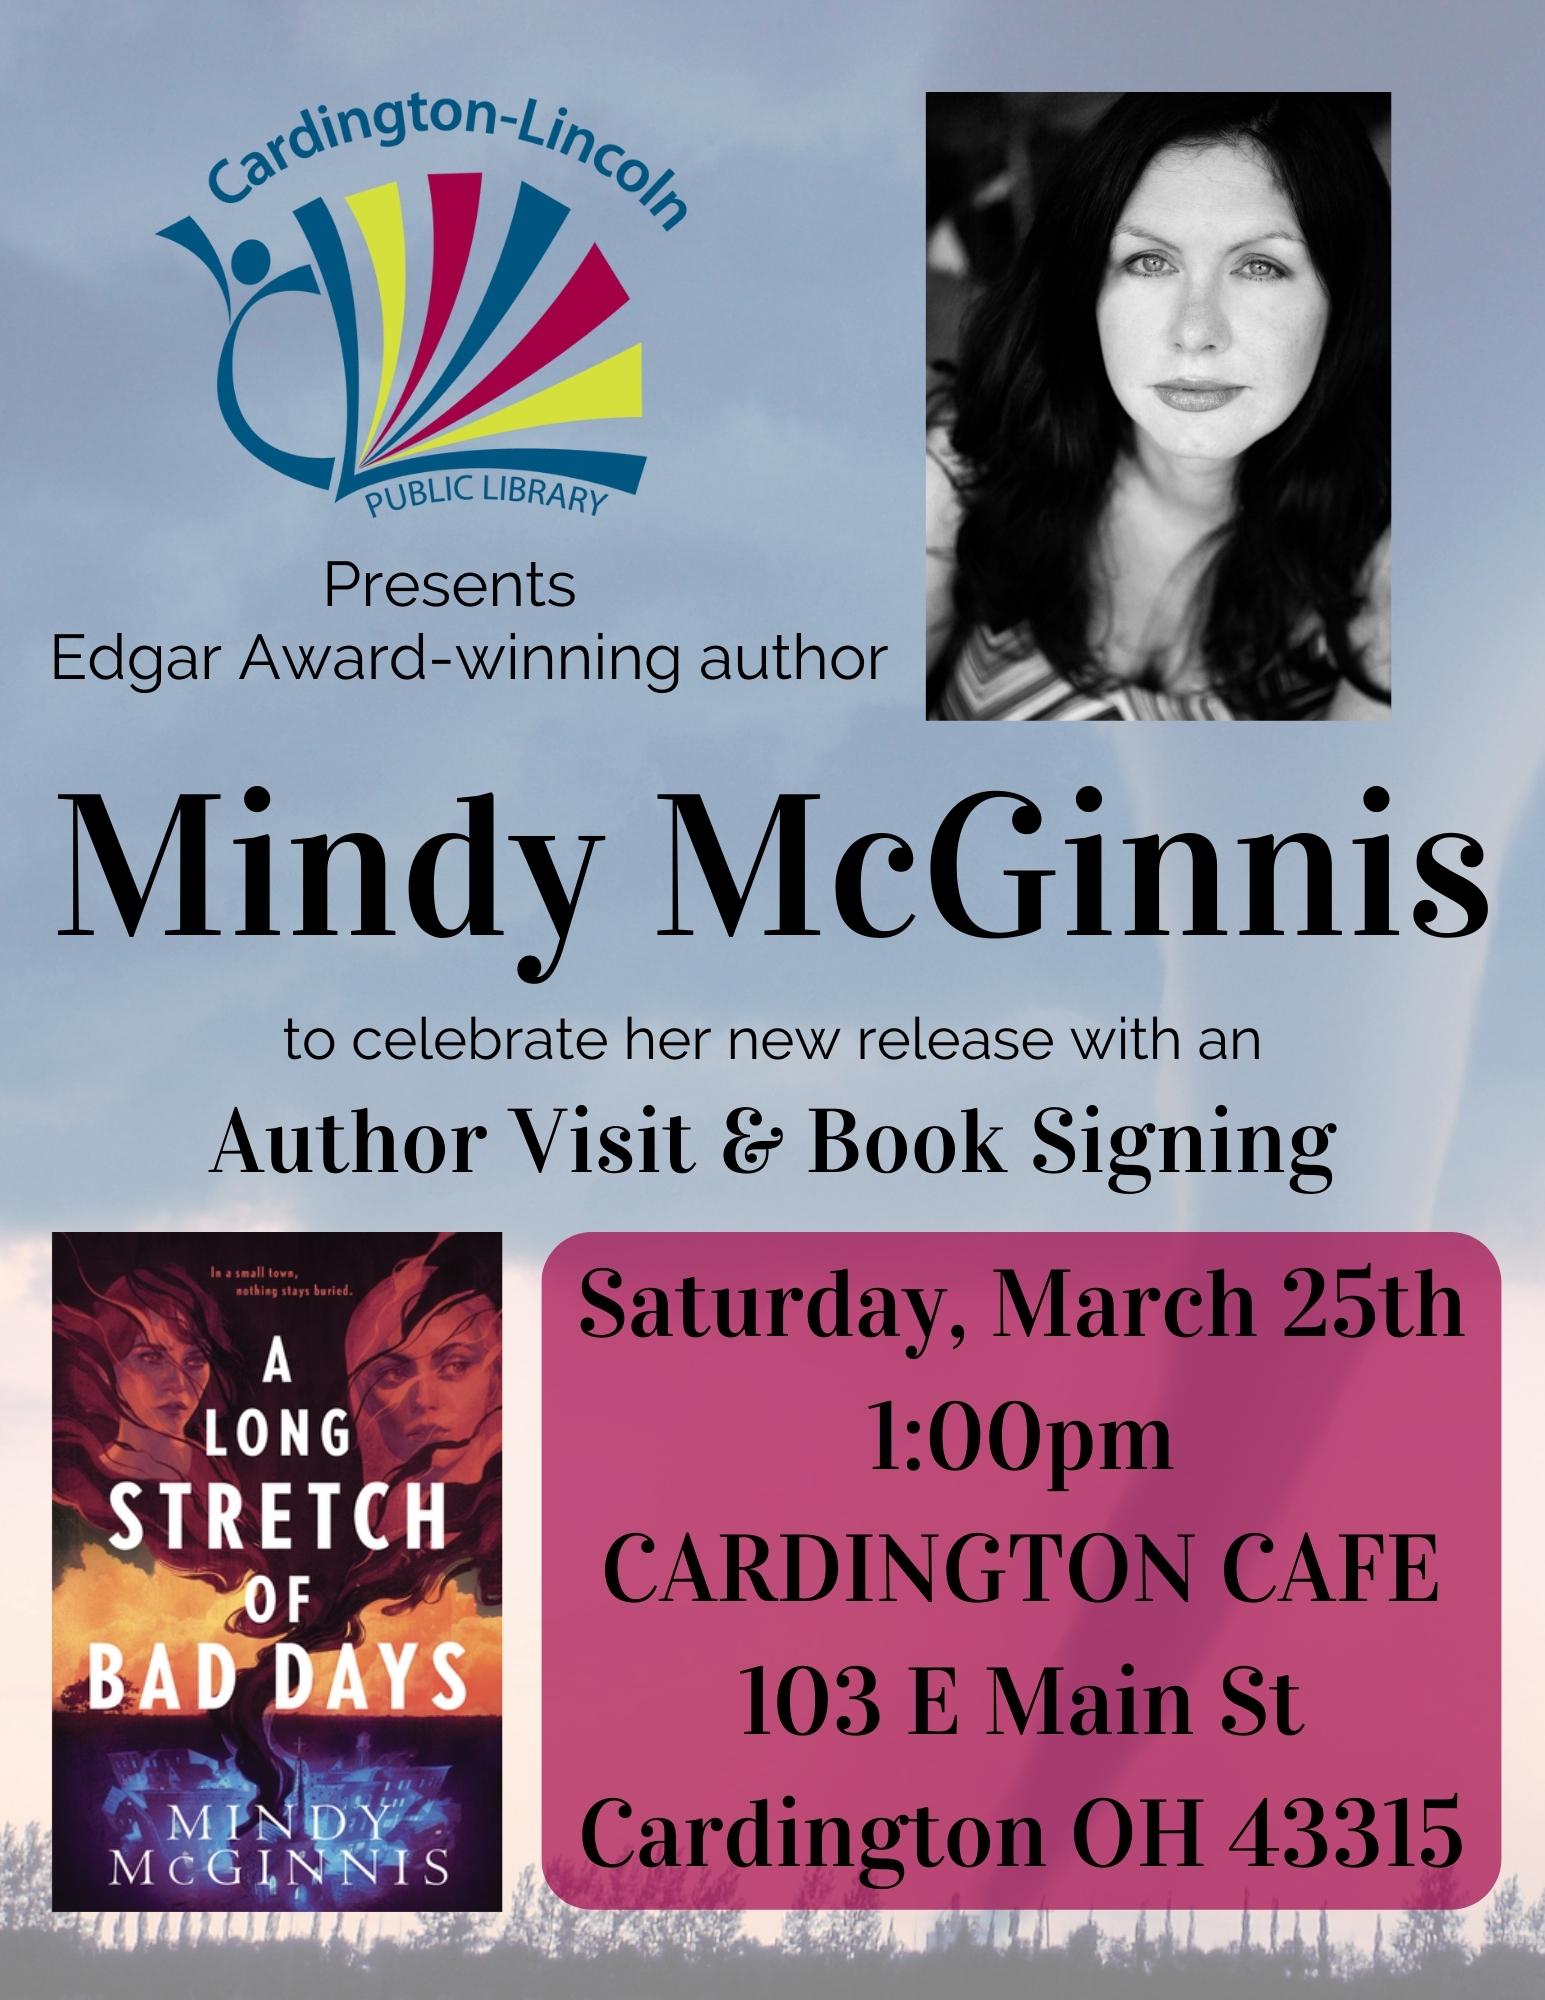 Book Signing with Mindy McGinnis at the Cardington Cafe